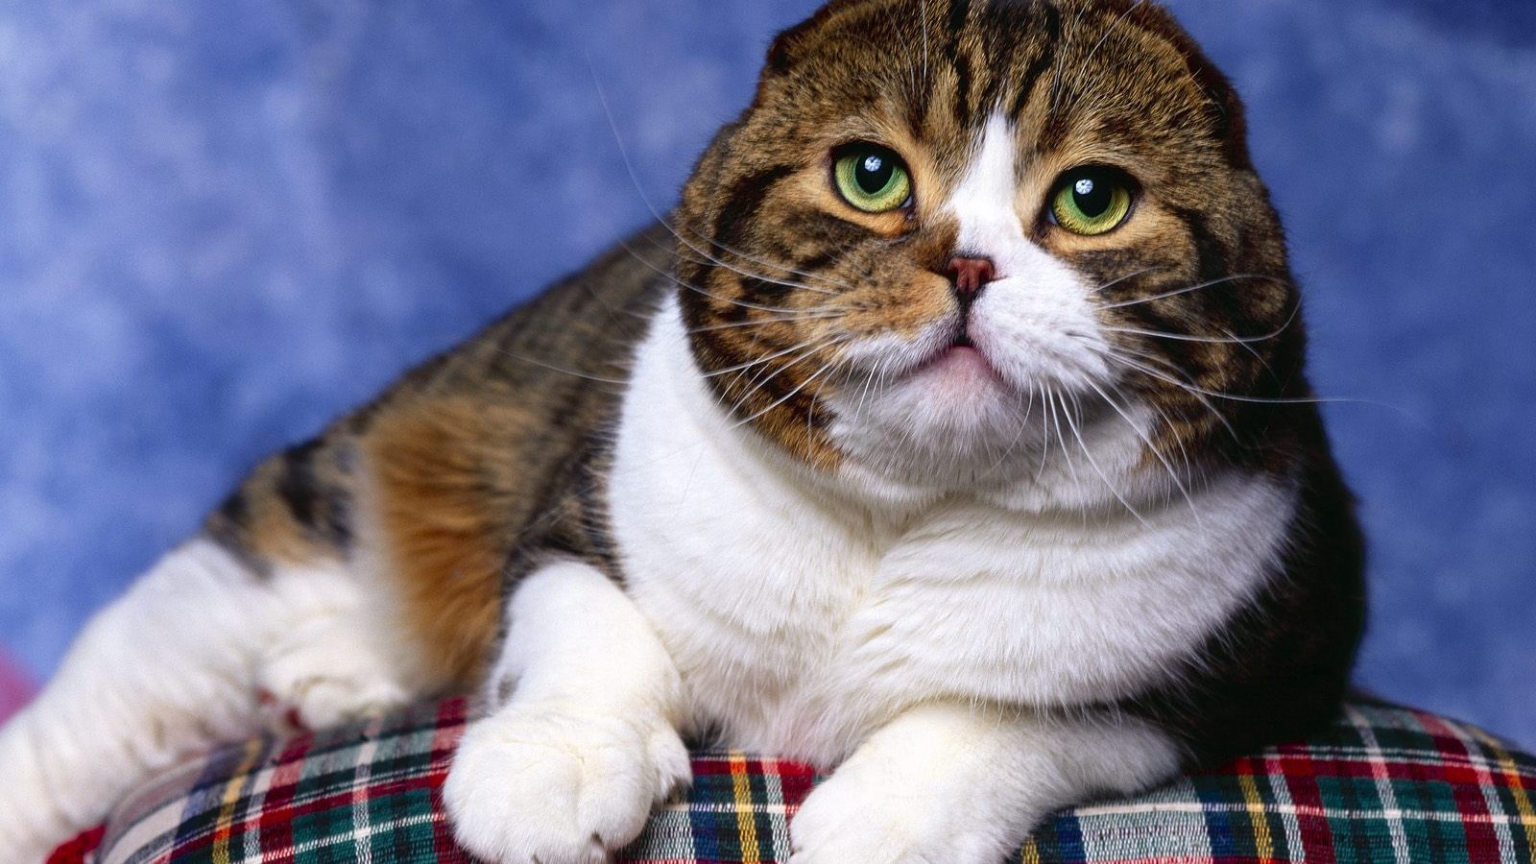 Scottish Fold Cat Photo Shoot for 1536 x 864 HDTV resolution